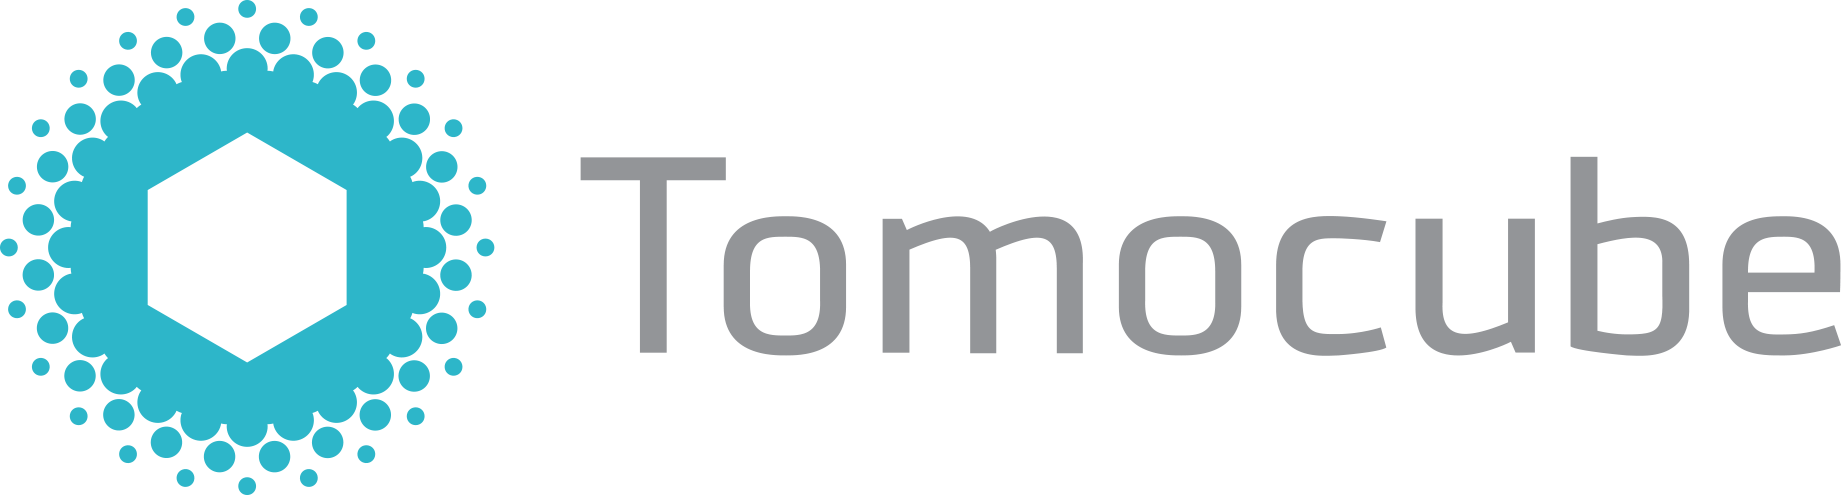 tomocube logo text